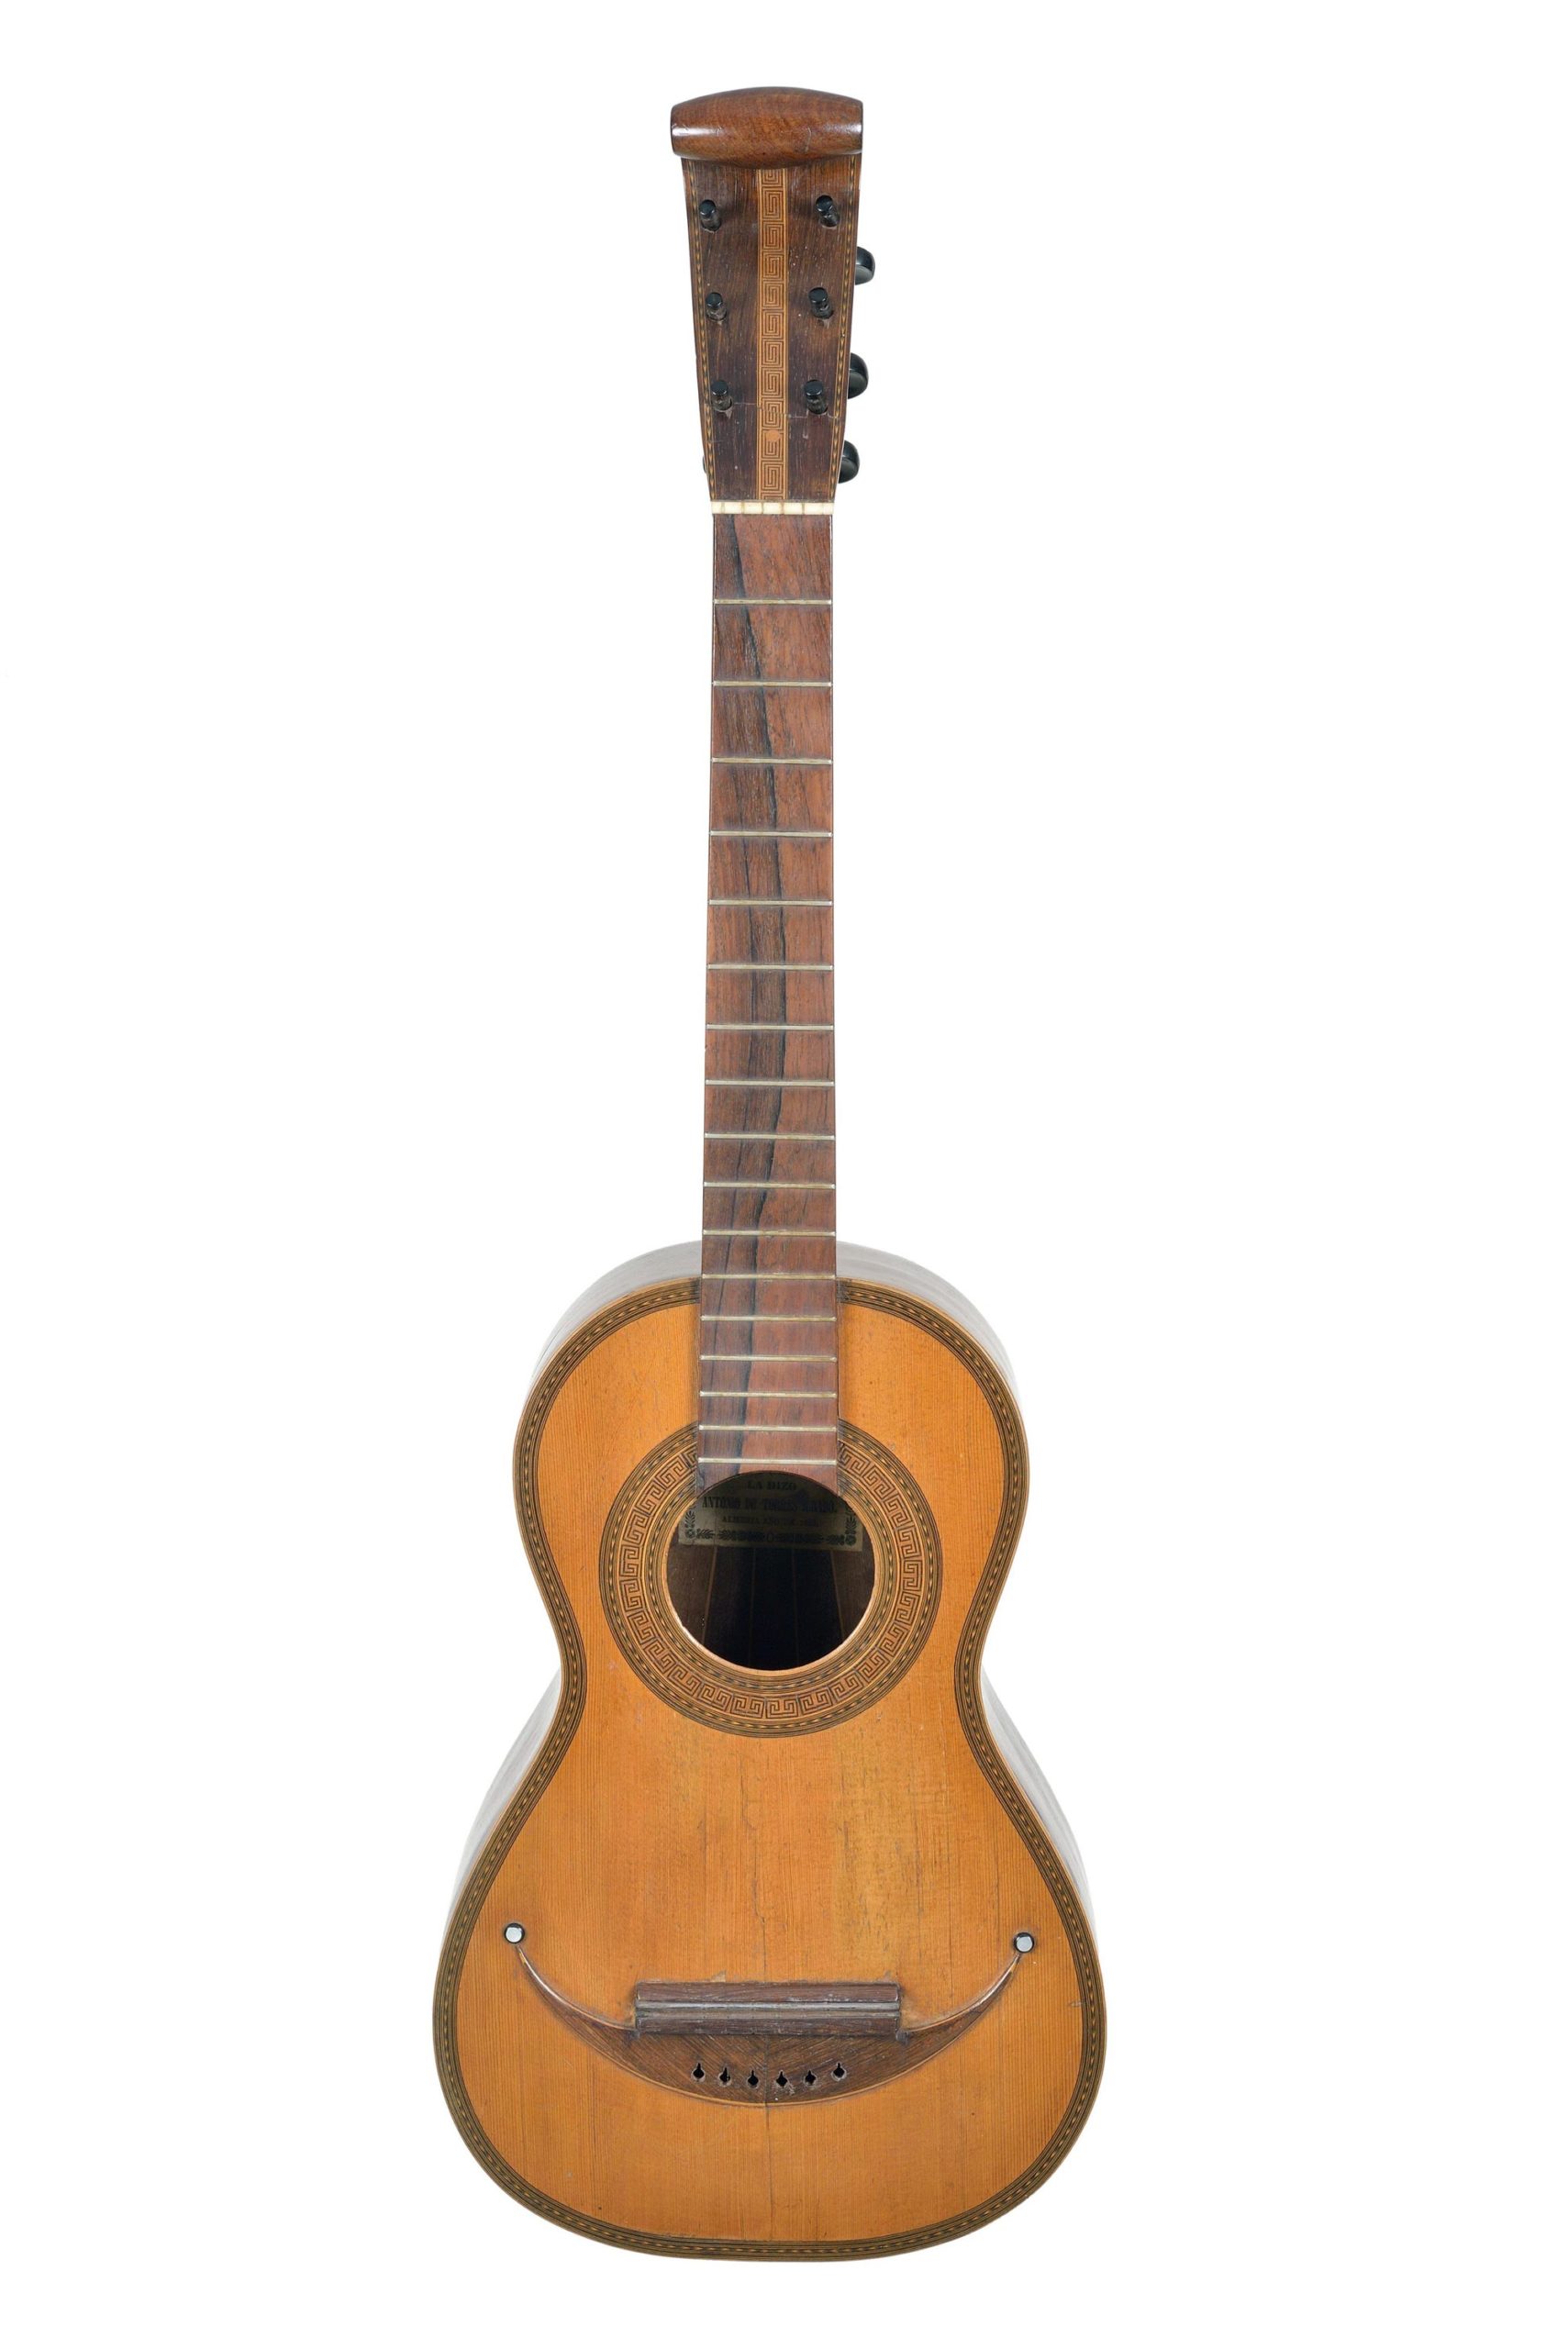 Guitare d'Antonio de TORRES, Almeria (Espagne), 1852